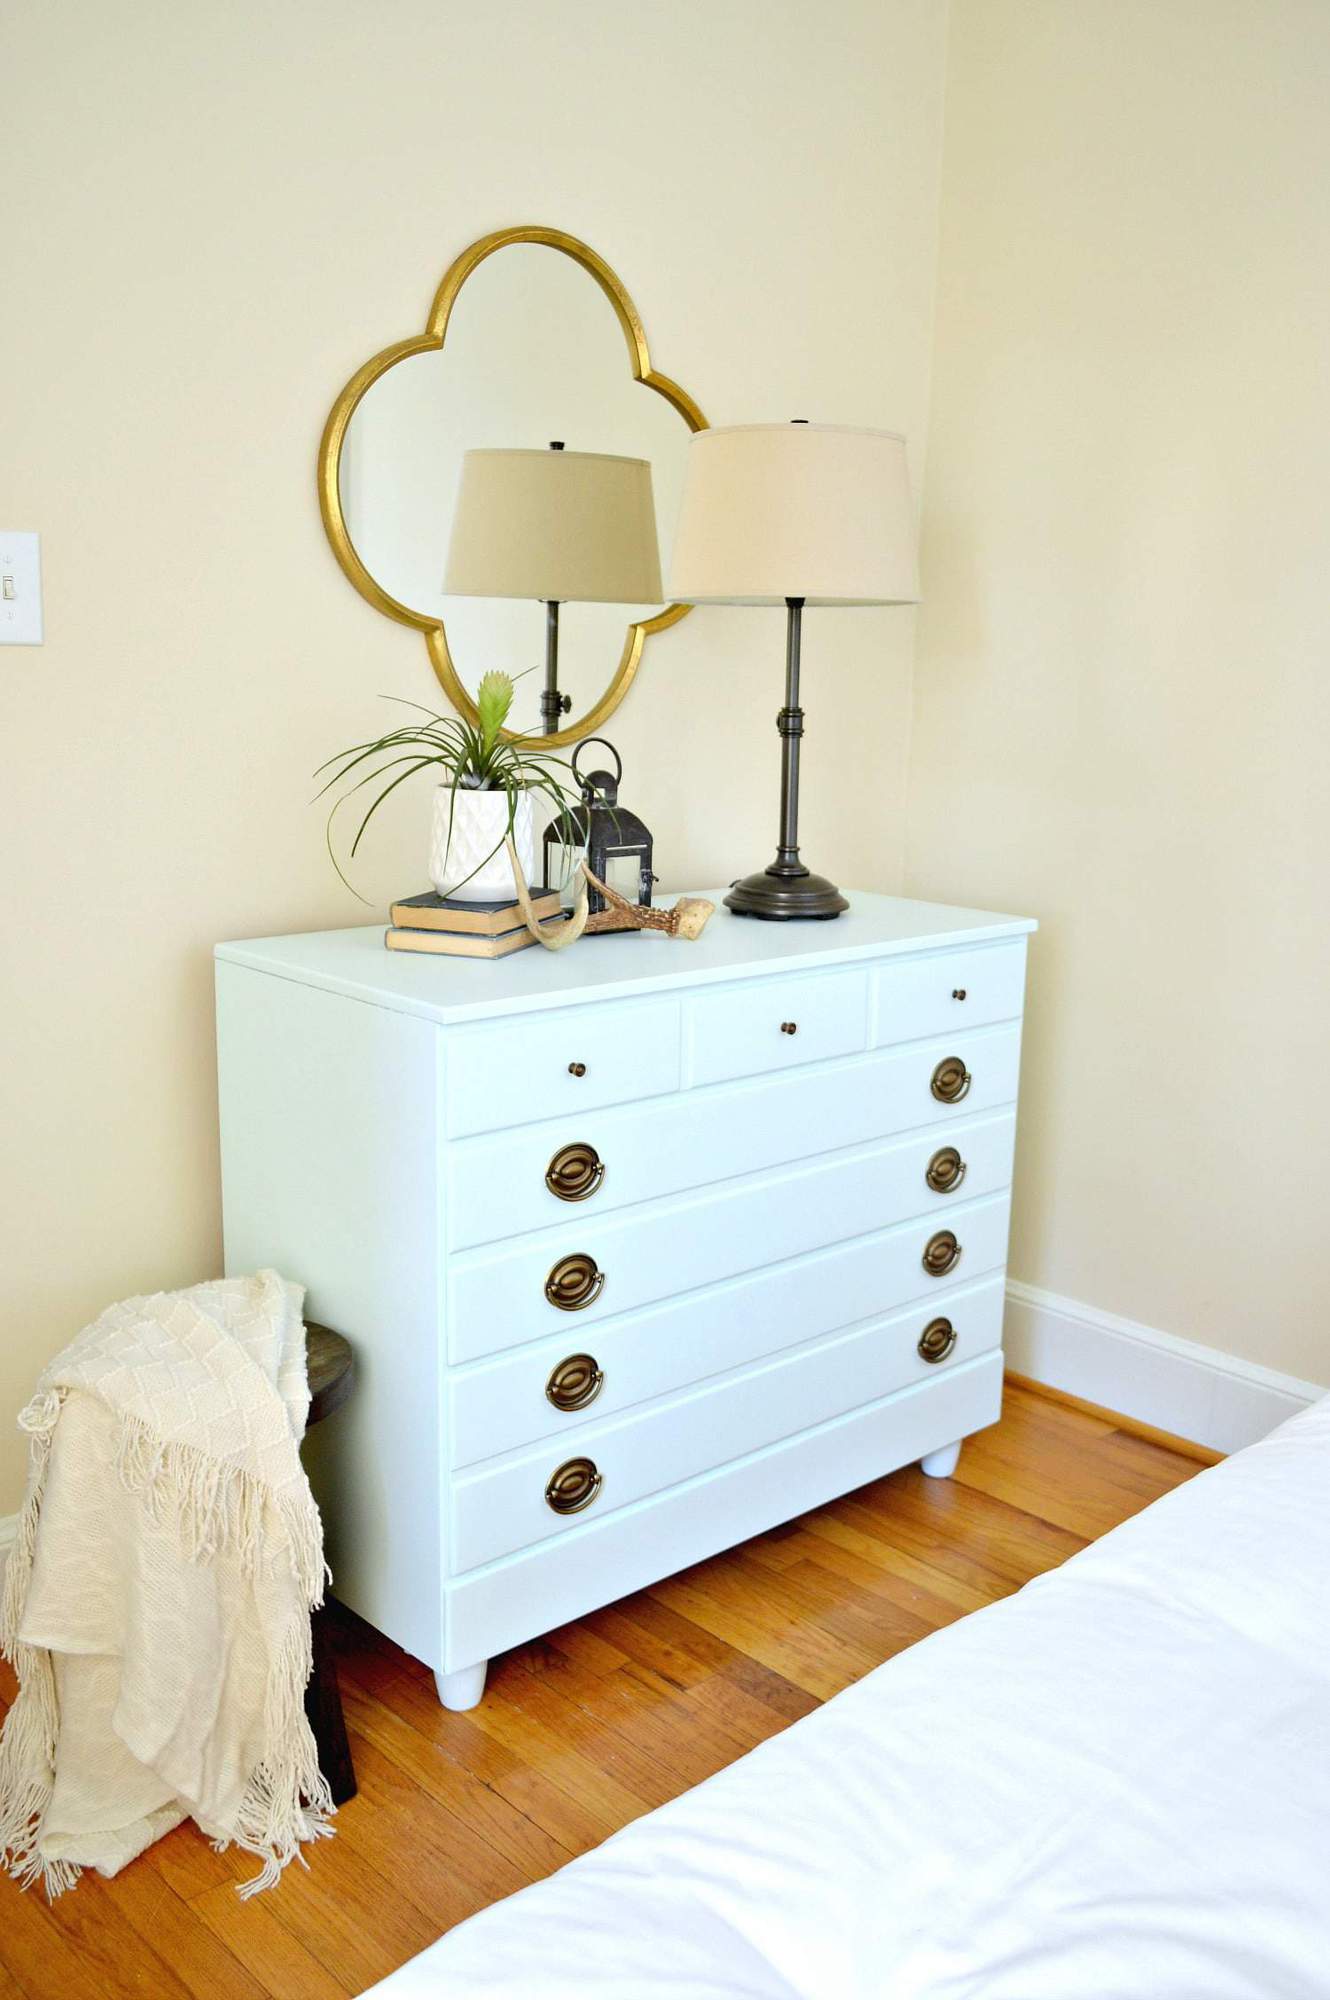 A painted bedroom dresser